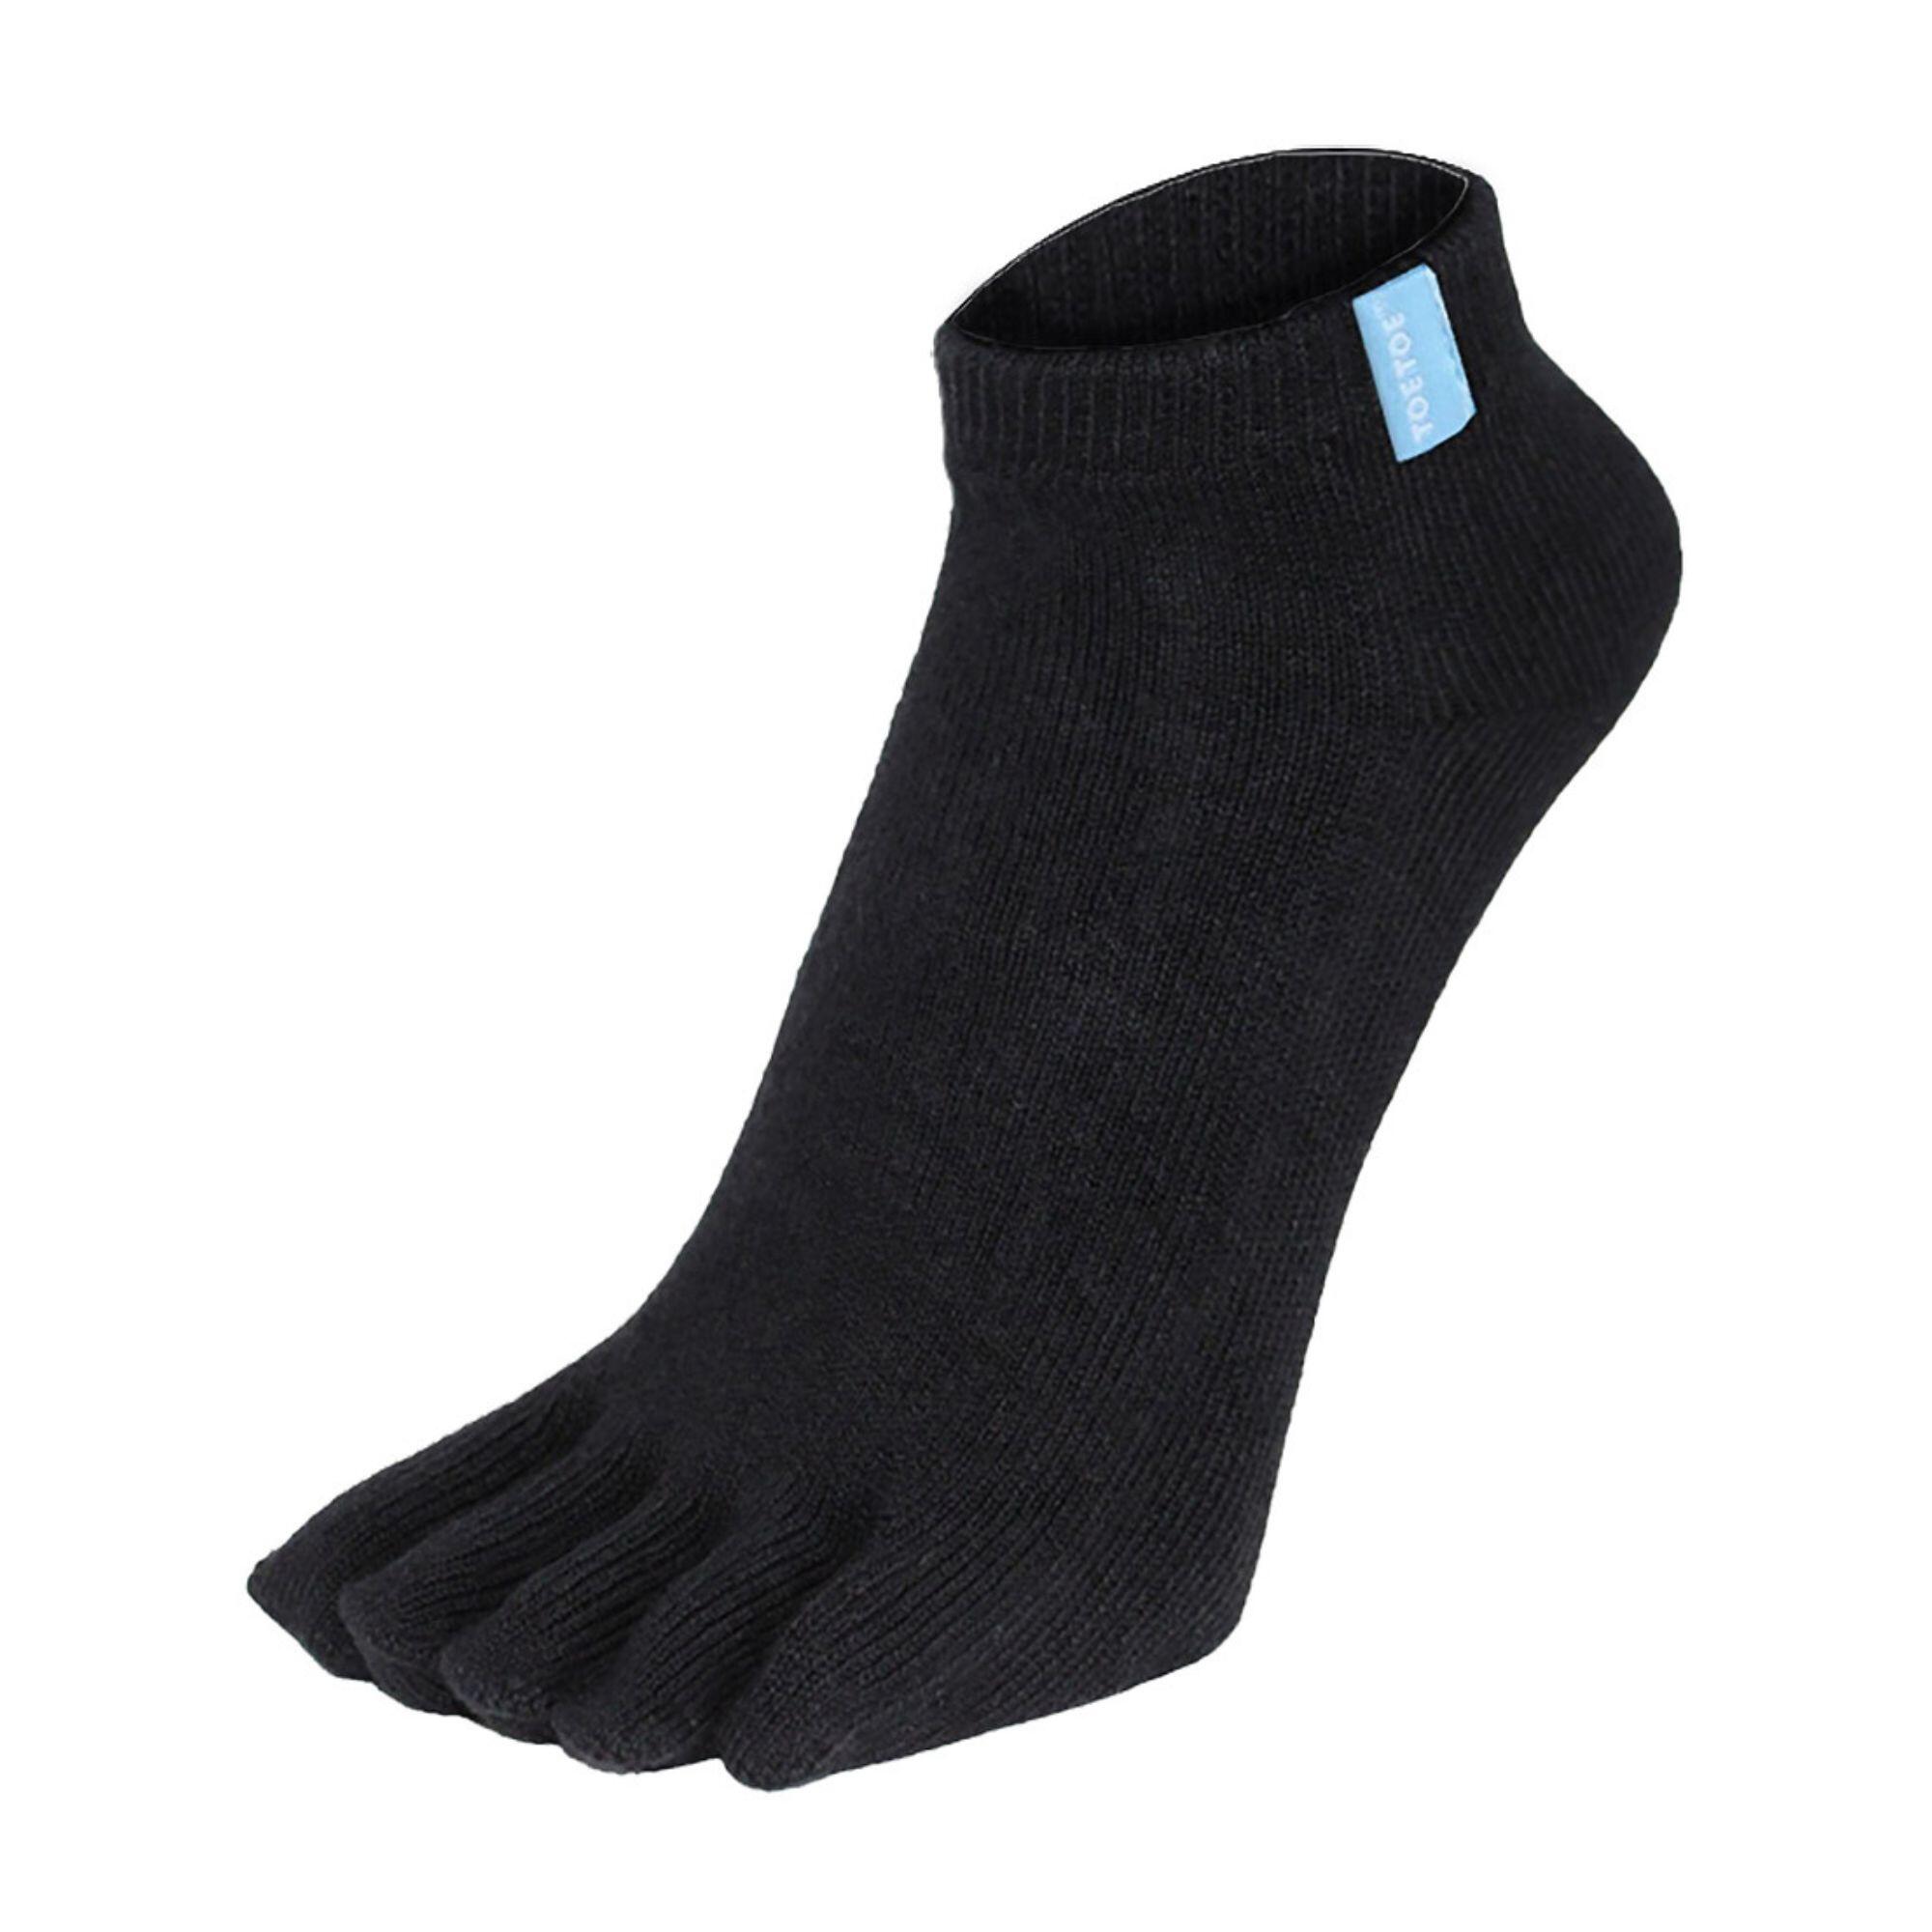 TOETOE® - Sports Tennis Toe Socks White Grey